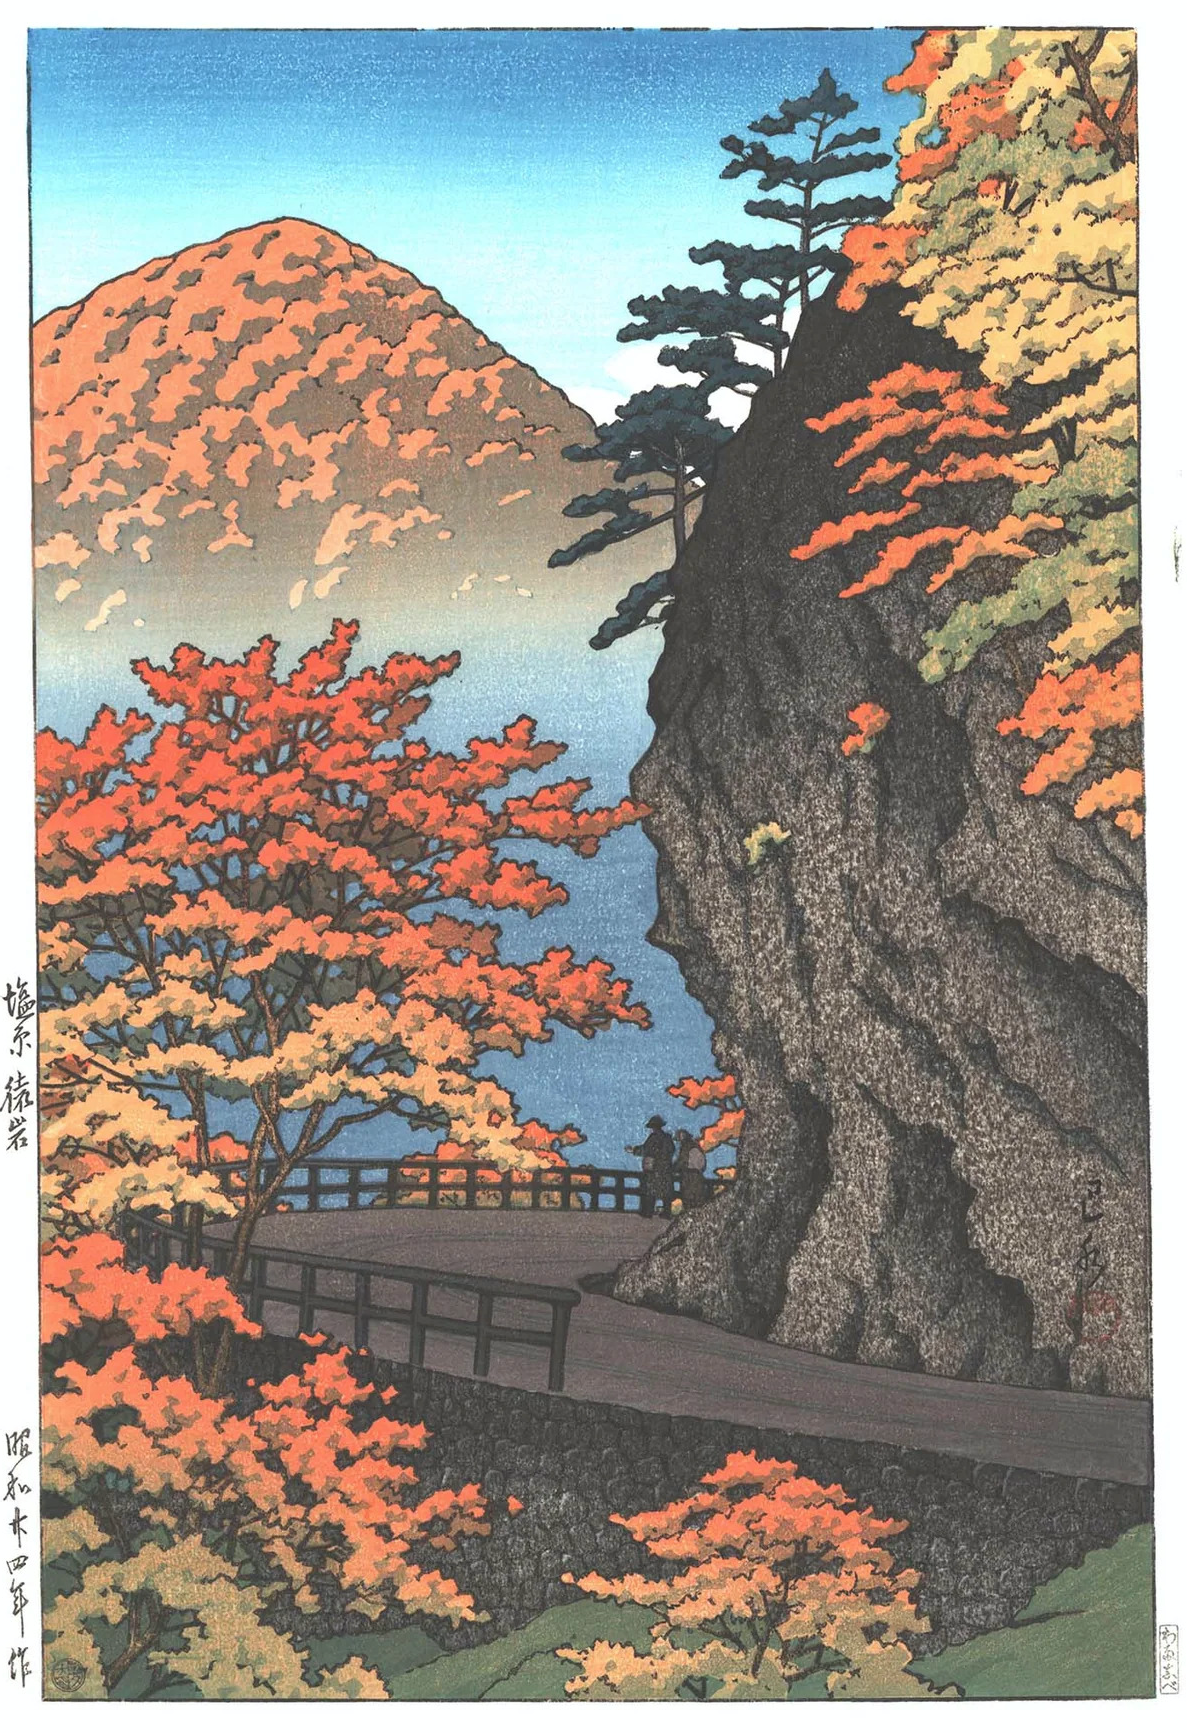 Herfst in Saruiwa, Shiobara by Hasui Kawase - 1949 - 38 x 24,4 cm 